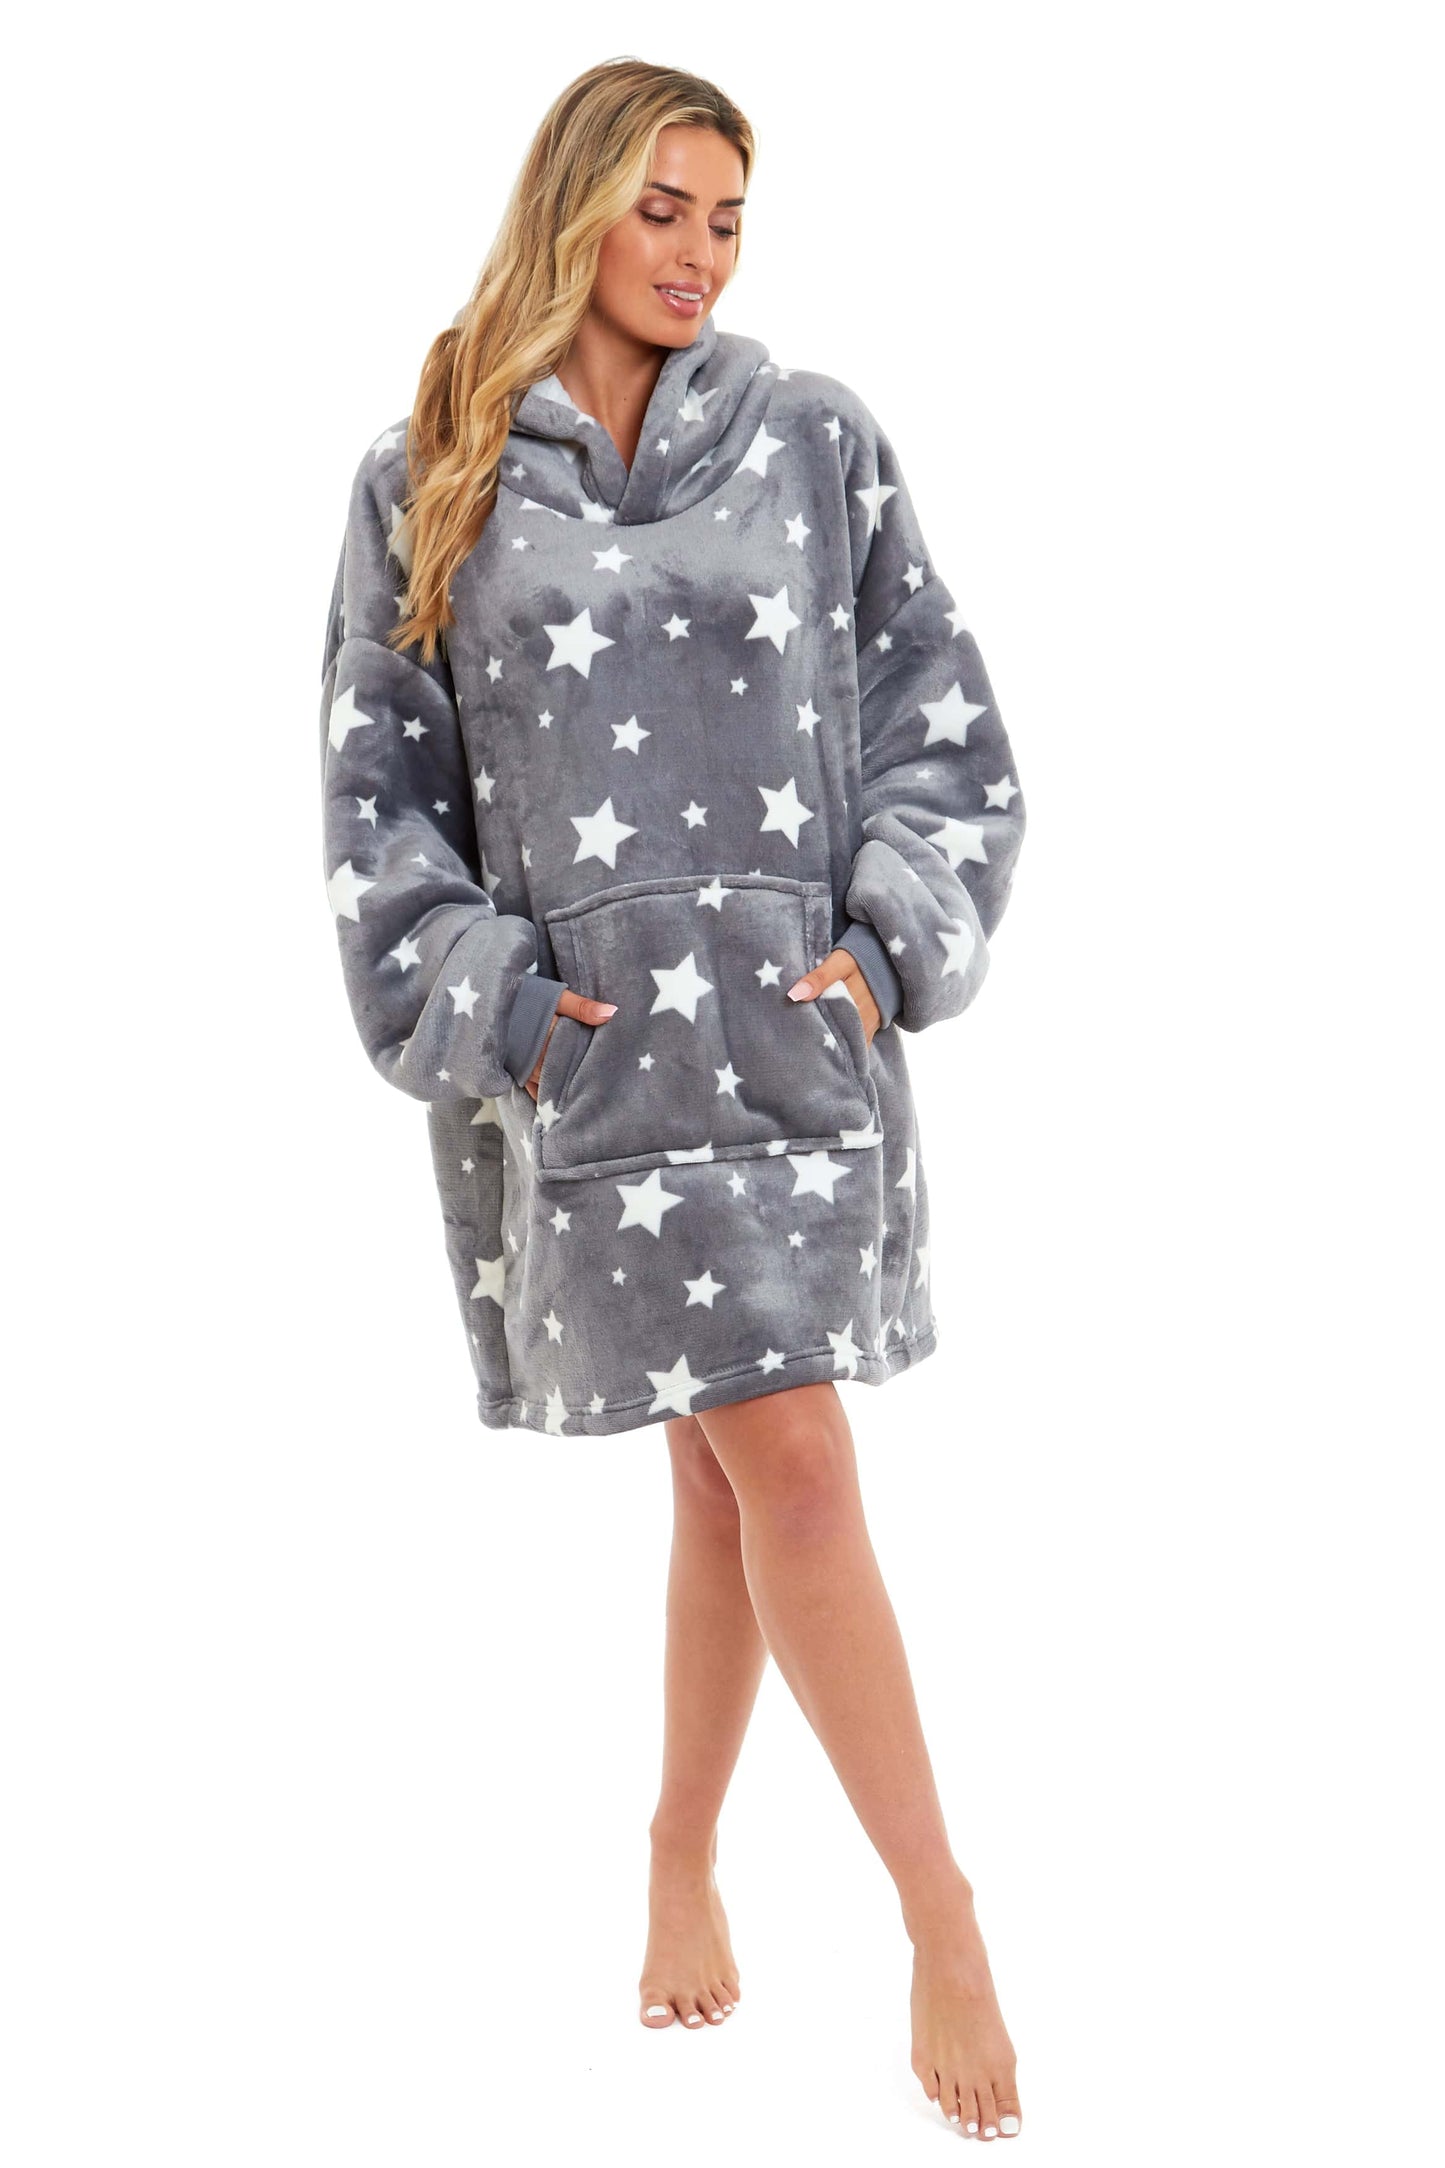 Oversized Grey Stars Hooded Plush Fleece With Reversible Sherpa Blanket. Buy now for £20.00. A Hooded Blanket by Daisy Dreamer. charcoal, clothing, flannel, fleece, grey, hooded blanket, kids, ladies, loungewear, nightwear, oodie, oversized top, plush, sh